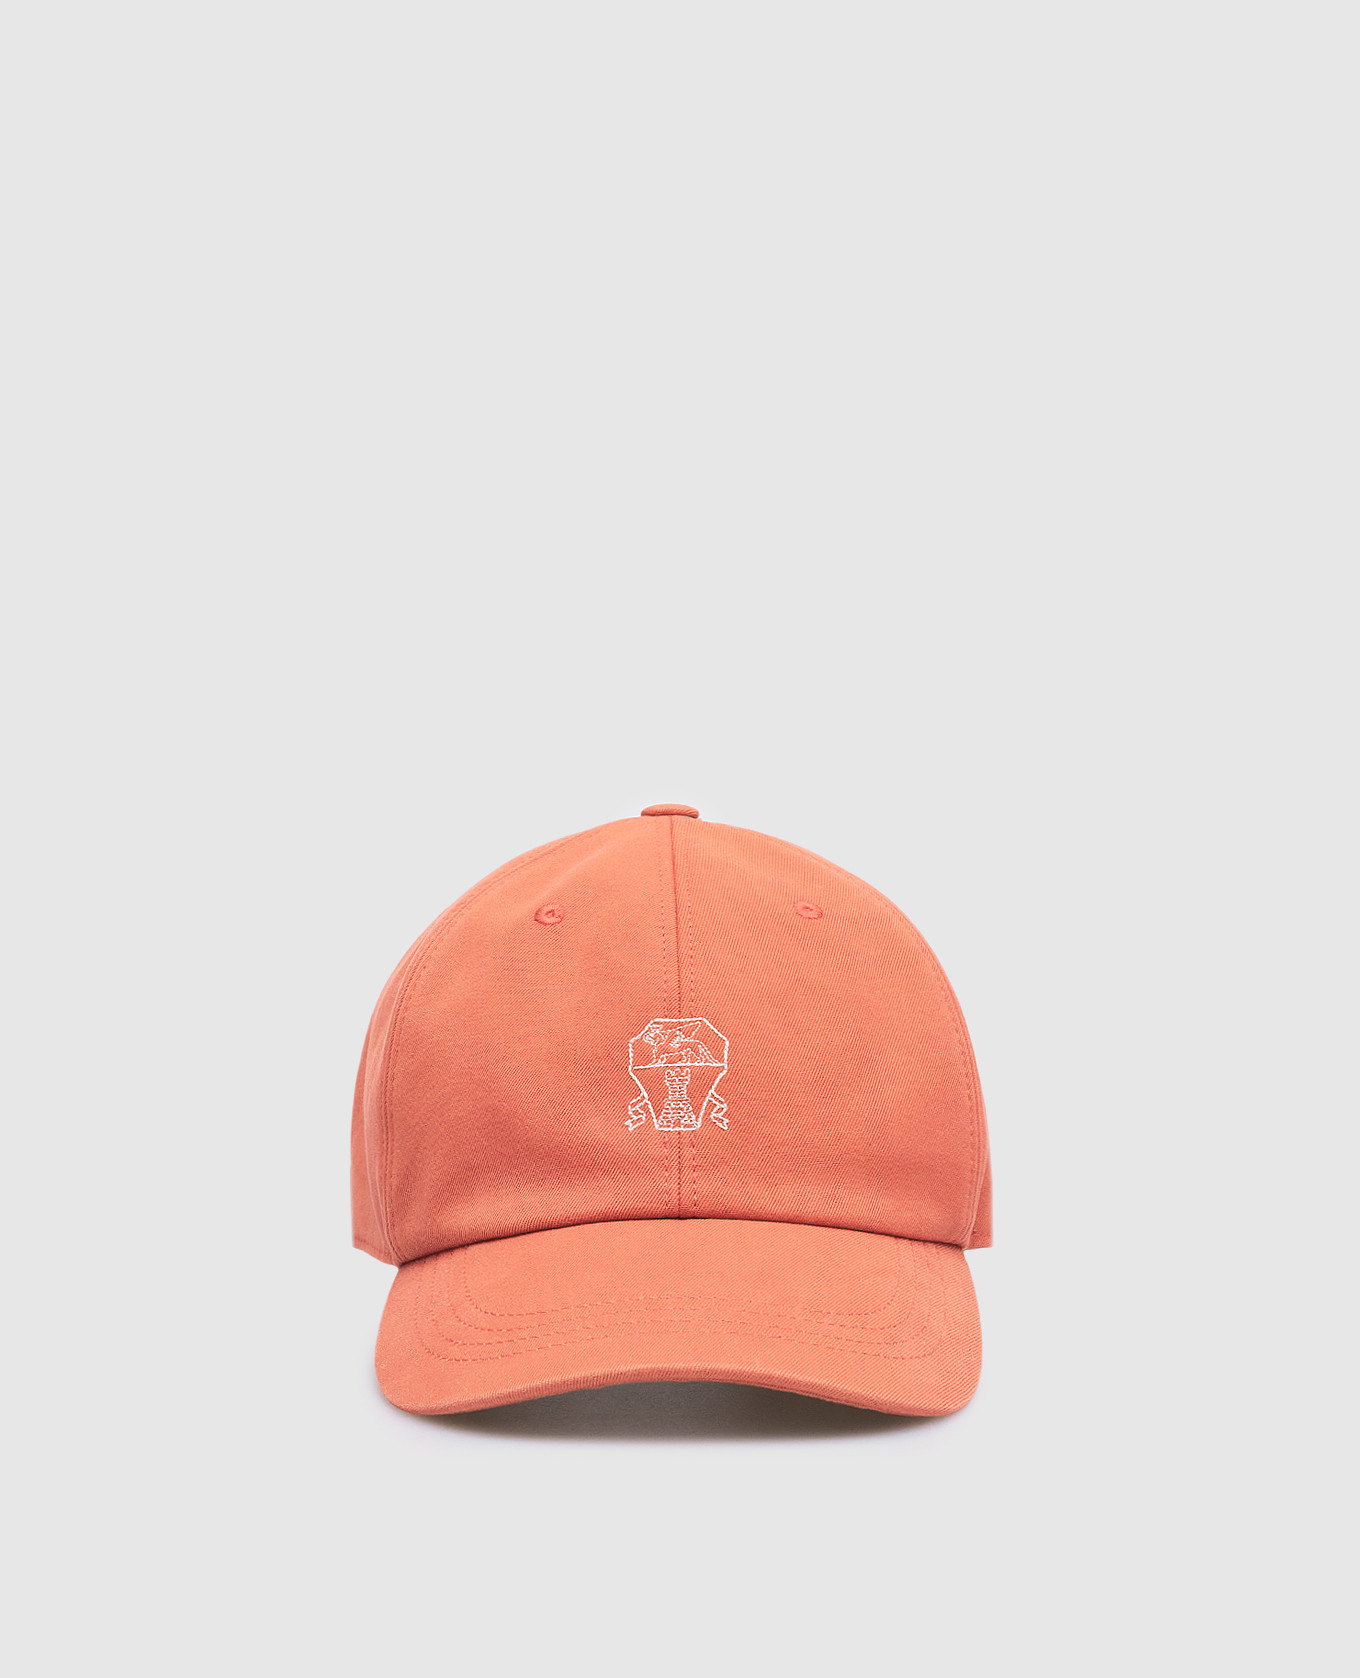 Orange cap with logo embroidery